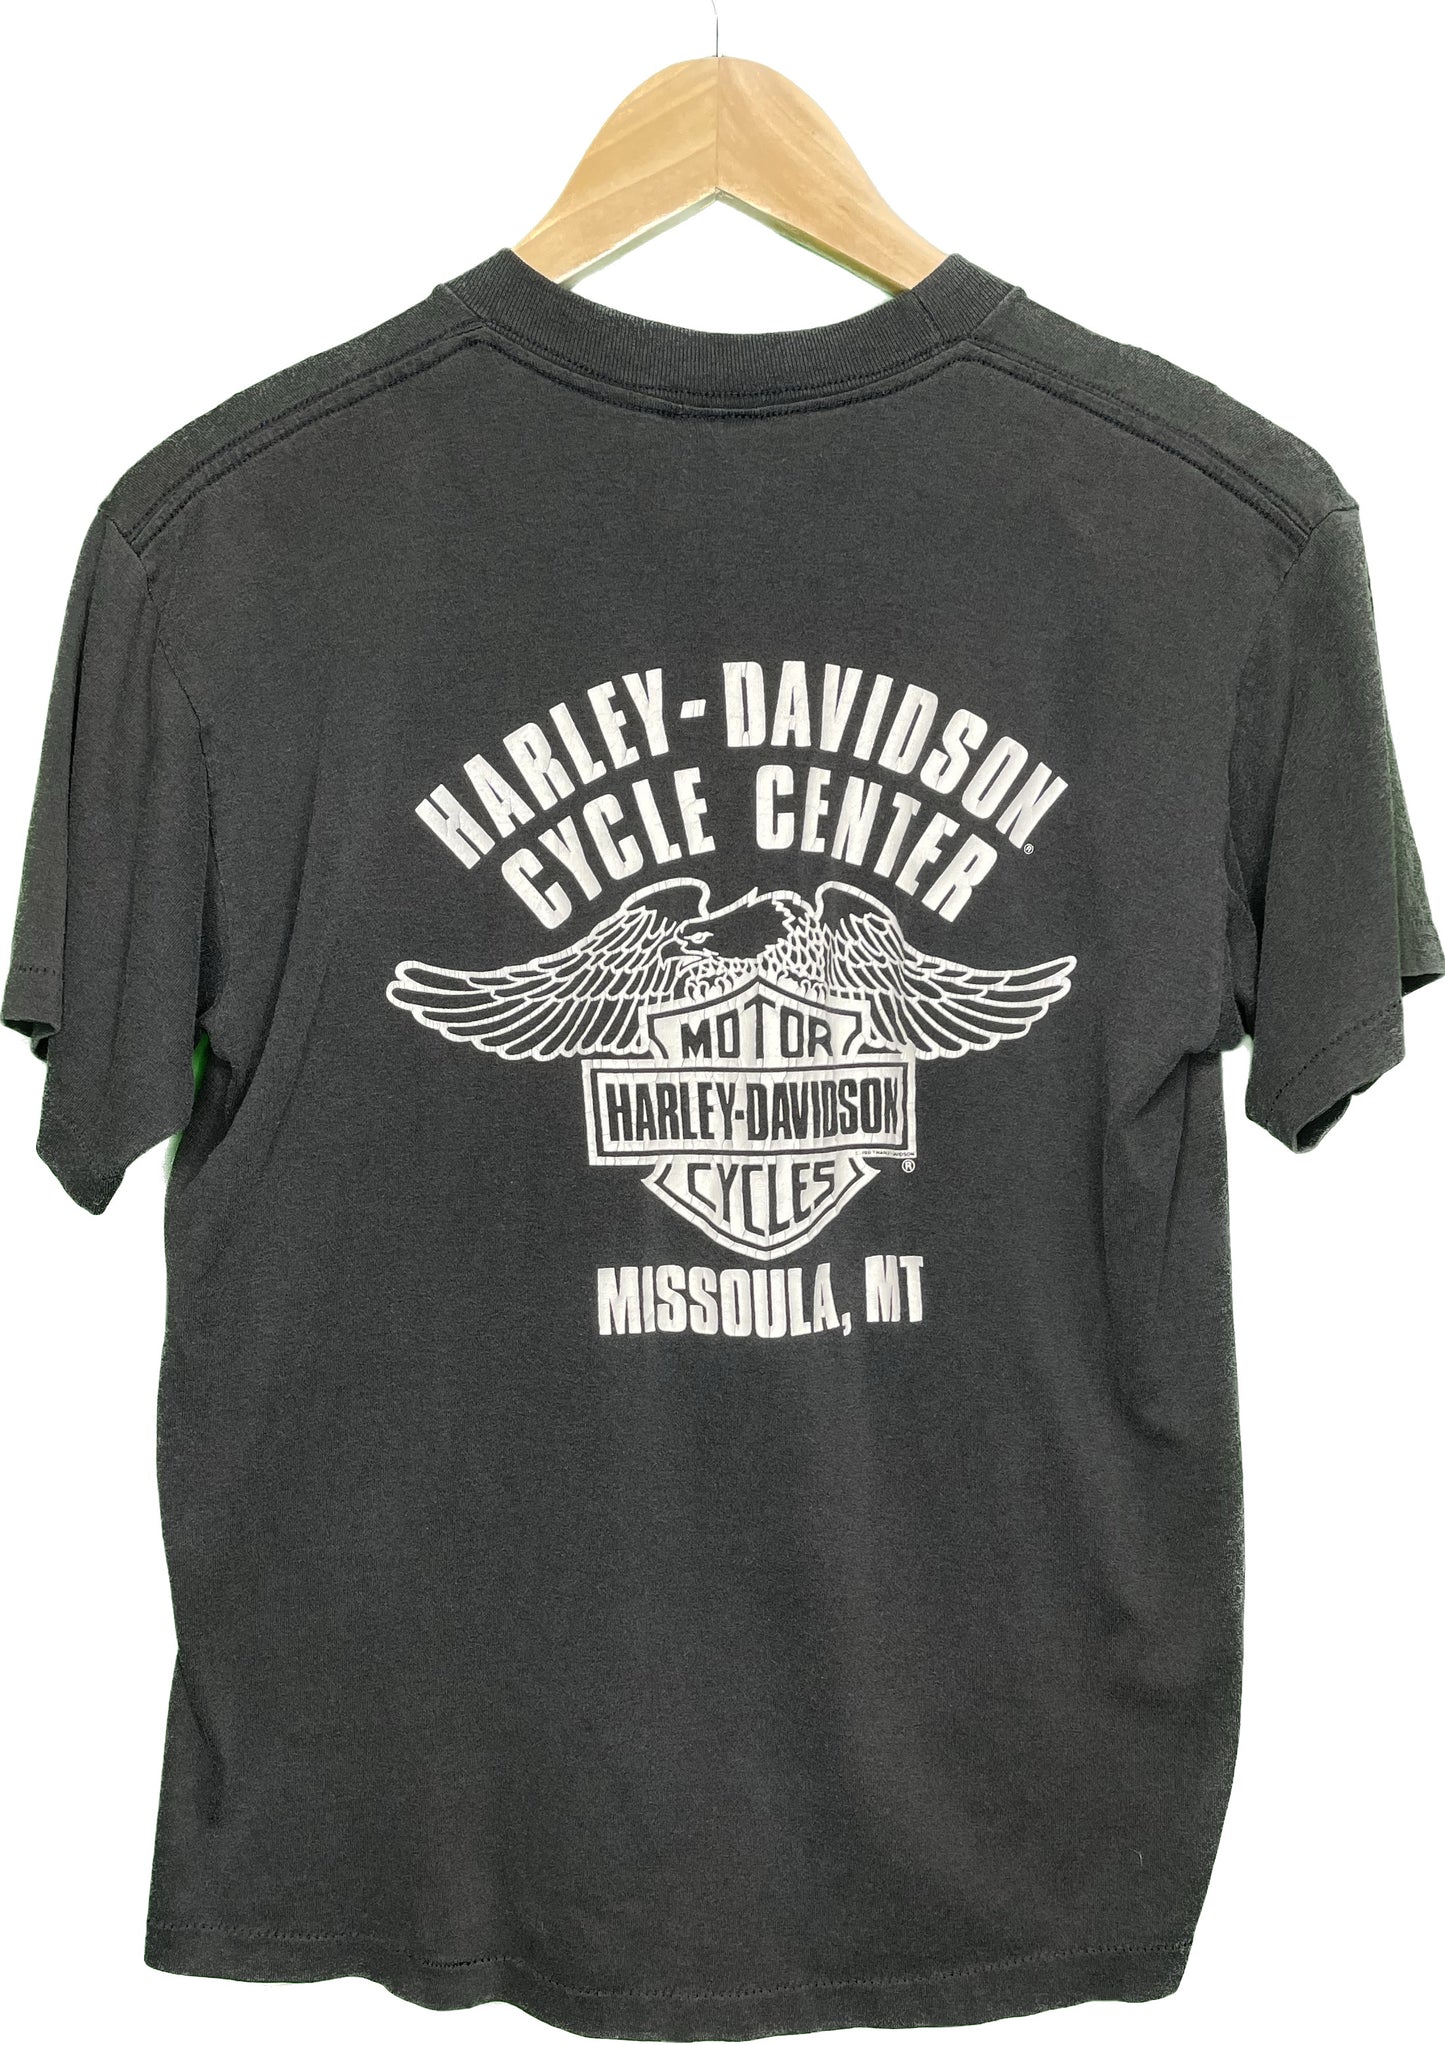 Vintage M 80s Harley Davidson Winnipeg Canada T-Shirt